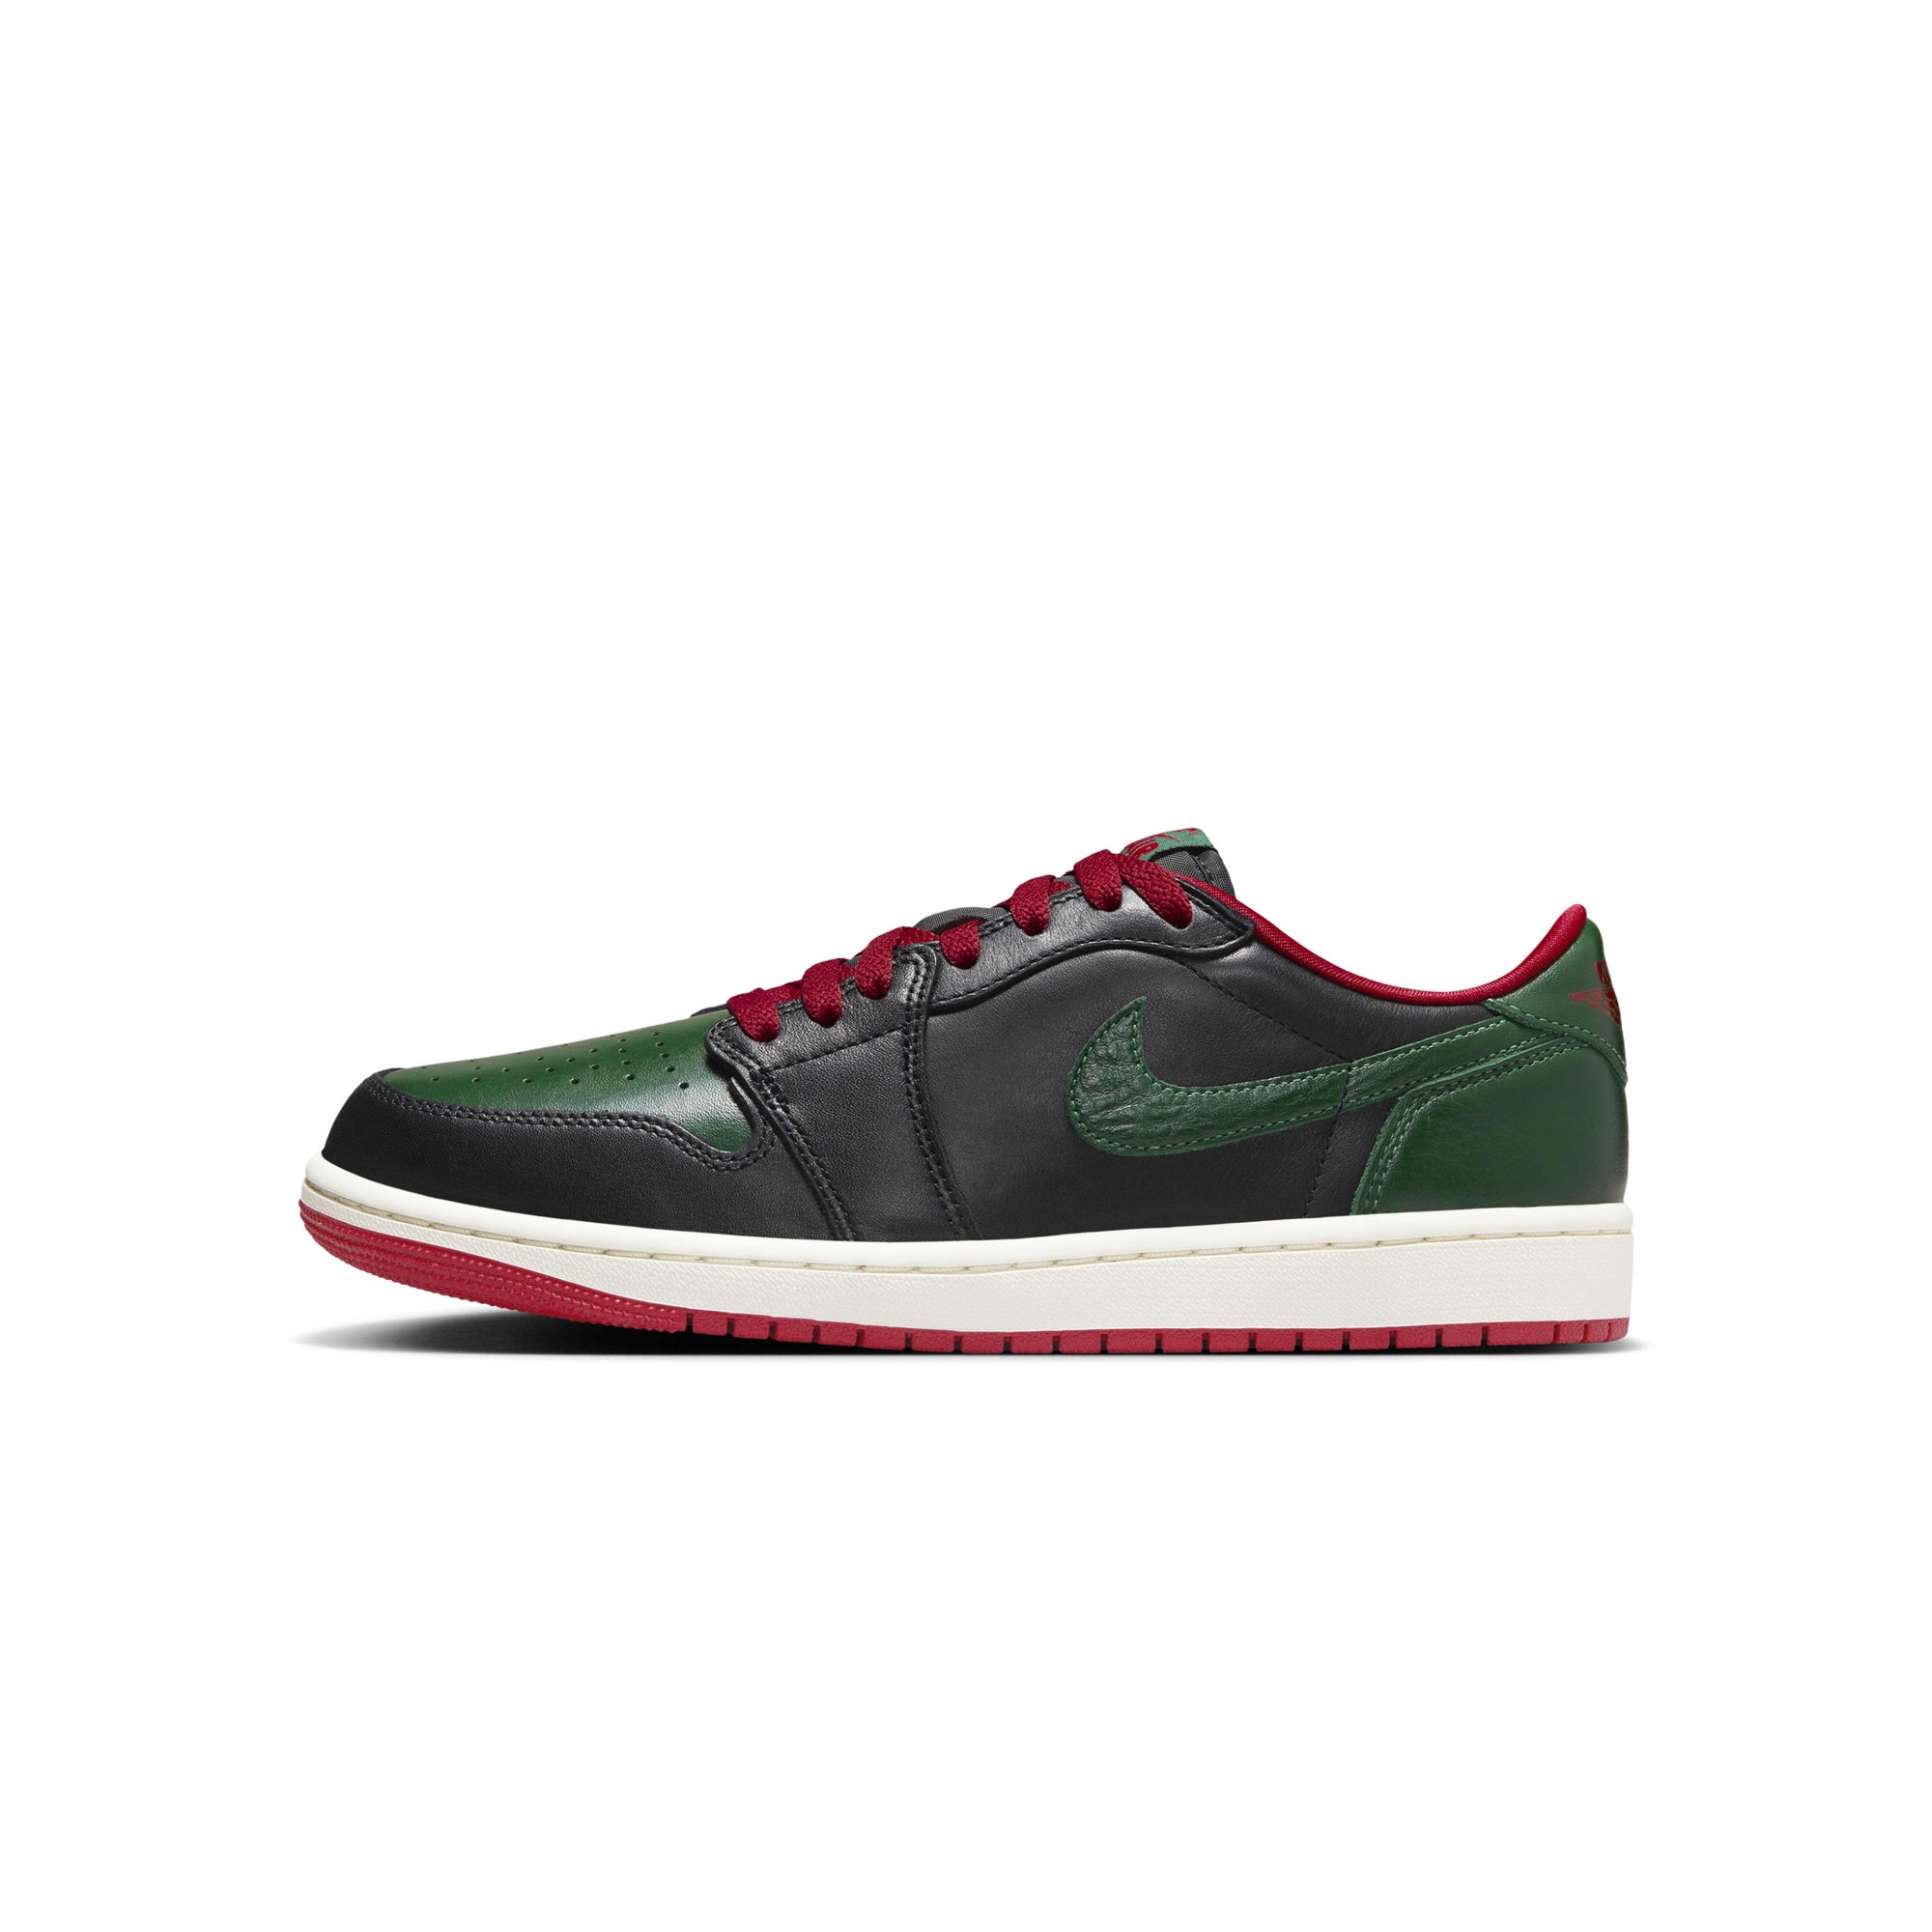 Air Jordan 1 Womens Low OG "Gorge Green" Shoes card image